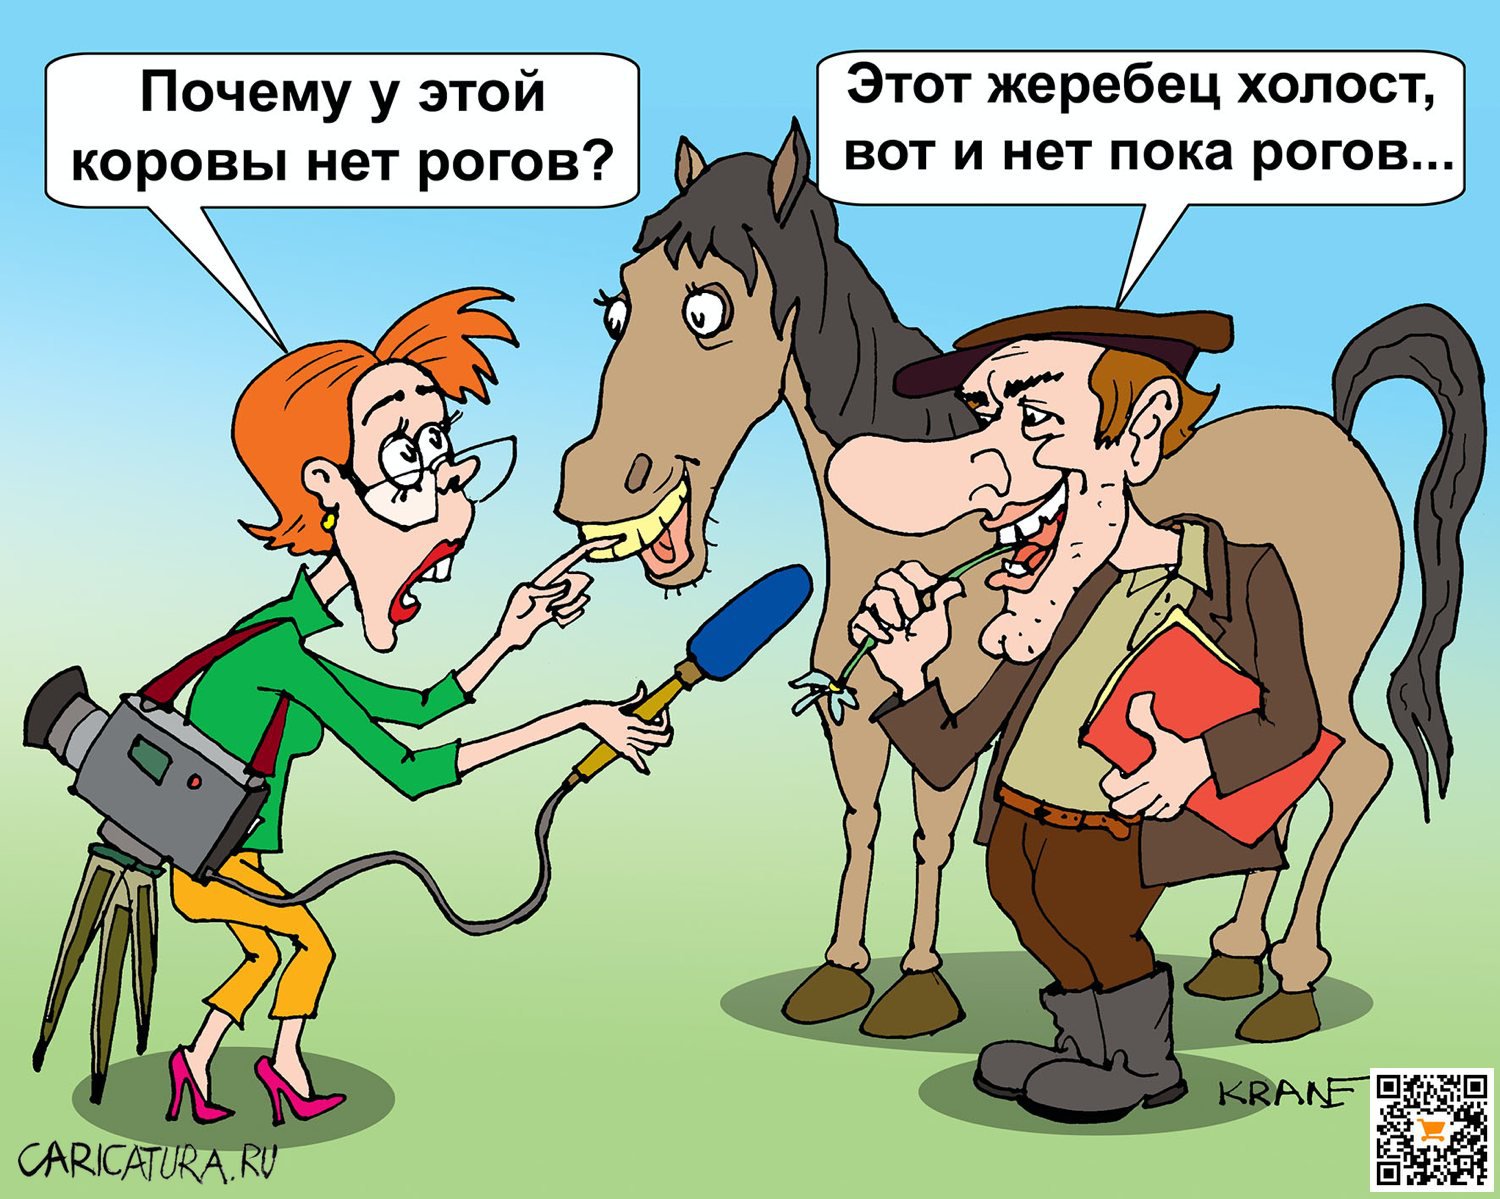 Карикатура "Золото для очка", Евгений Кран